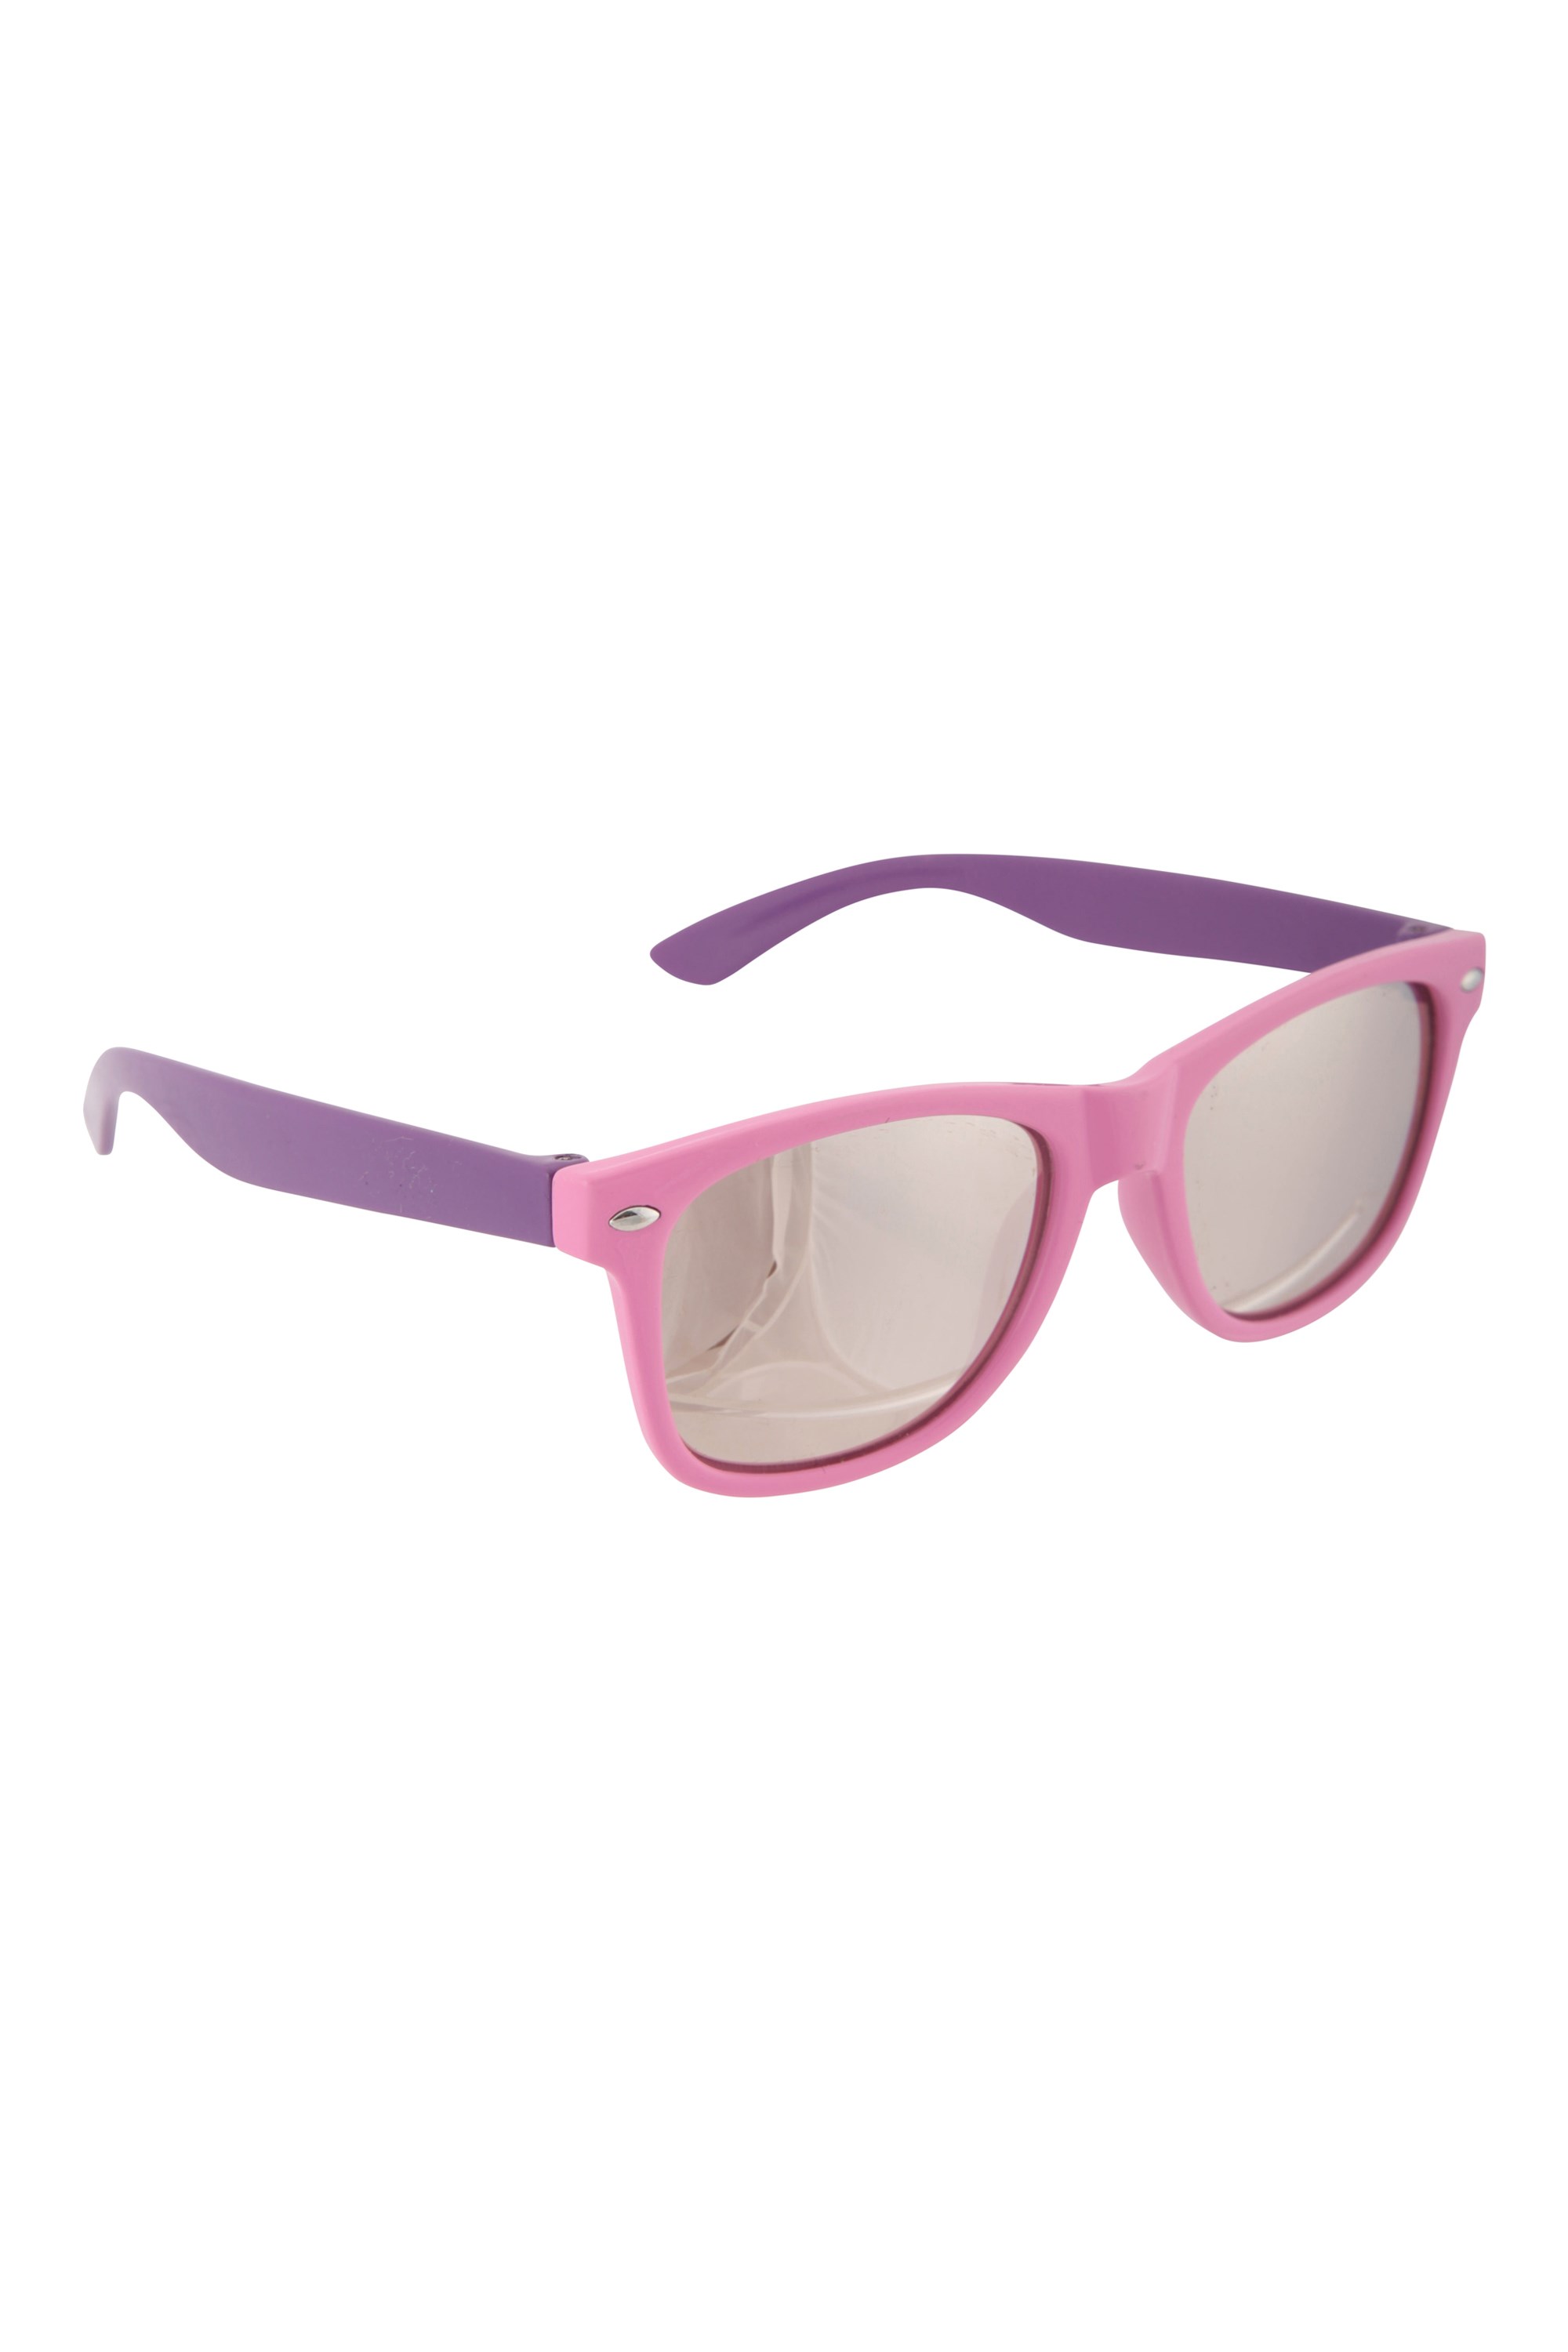 Mountain Warehouse Grl Blinky Beach Kids Sunglasses Eyewear 